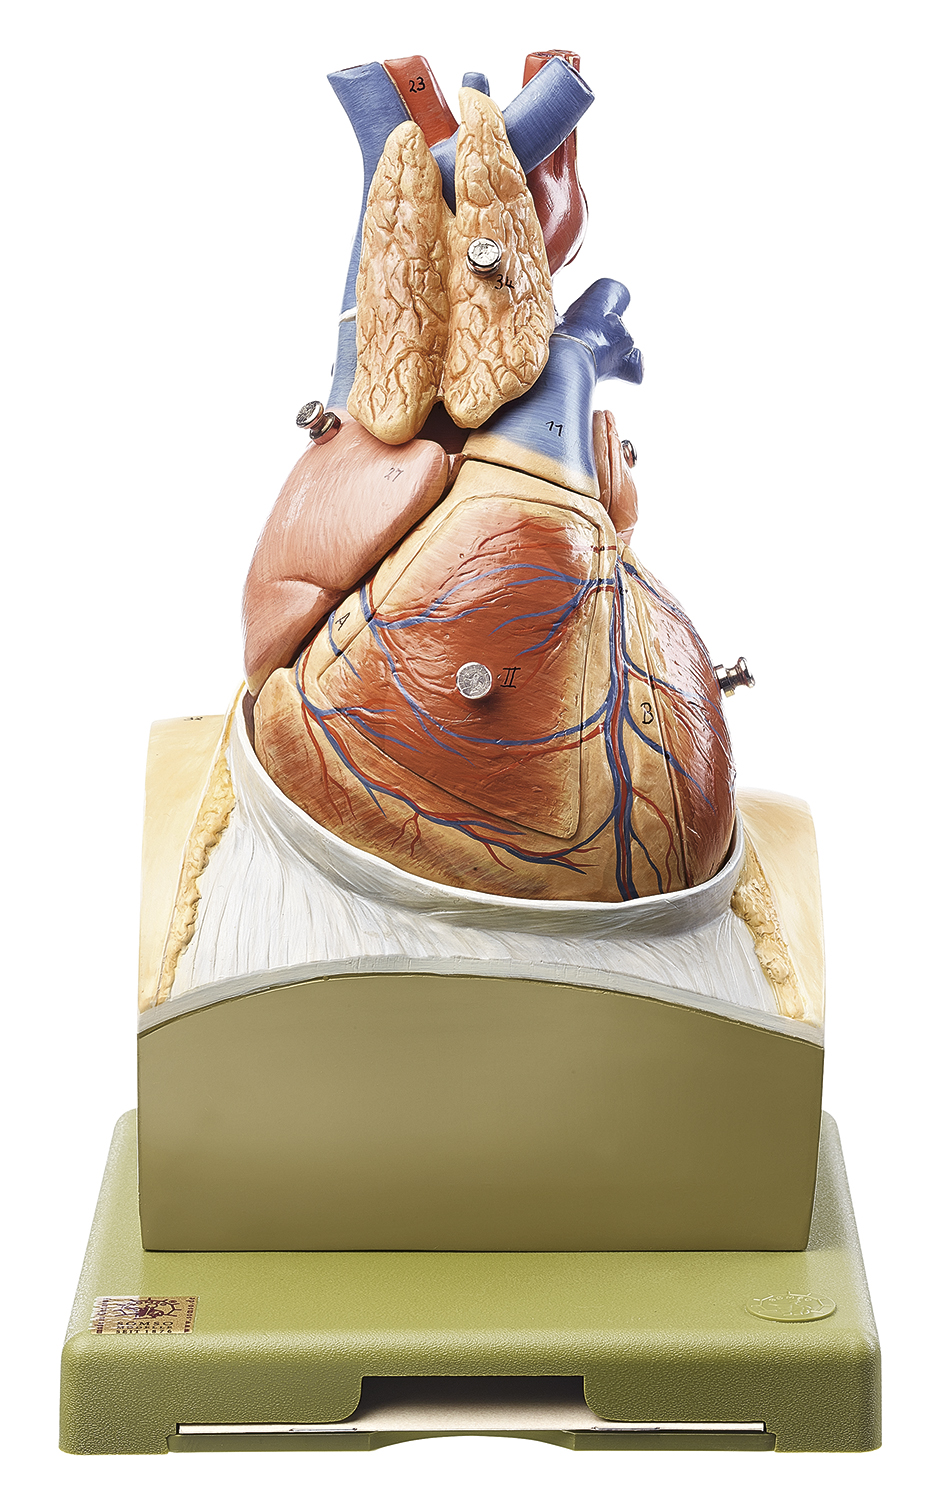 Herz auf Zwerchfellsockel, Bestellnummer HS 22, SOMSO-Modelle